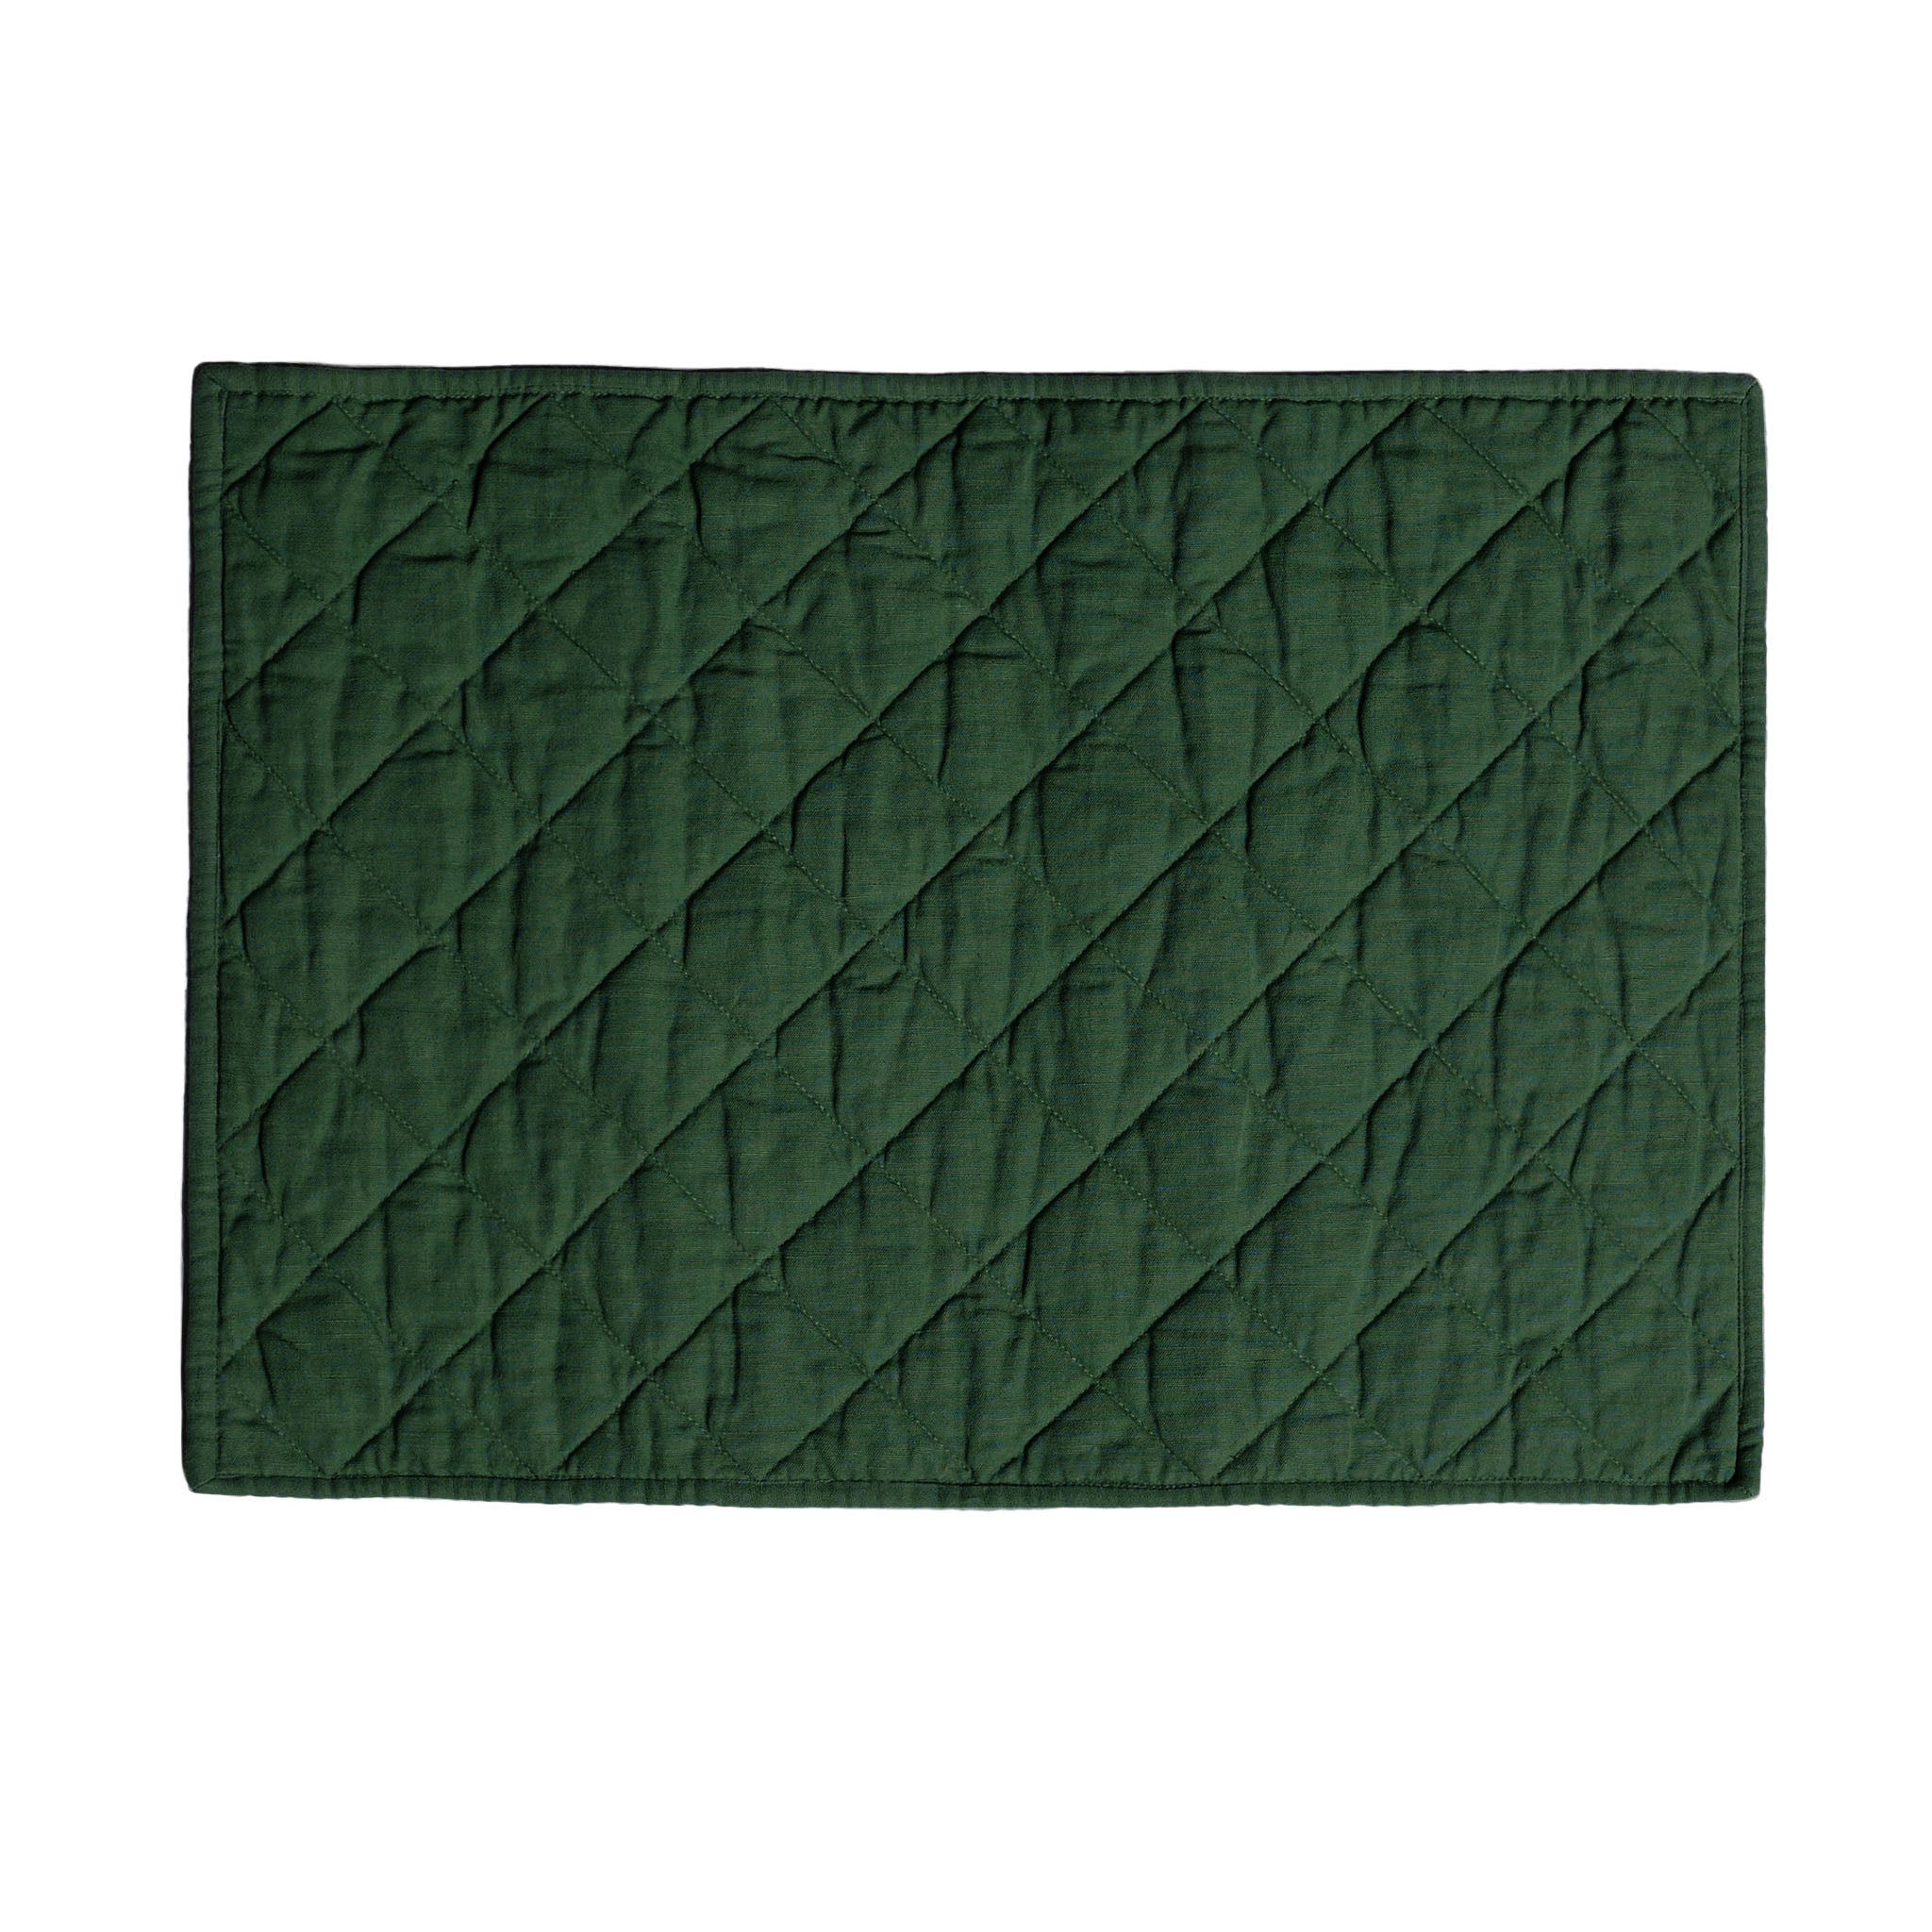 Wood green rectangular-shaped Placemat